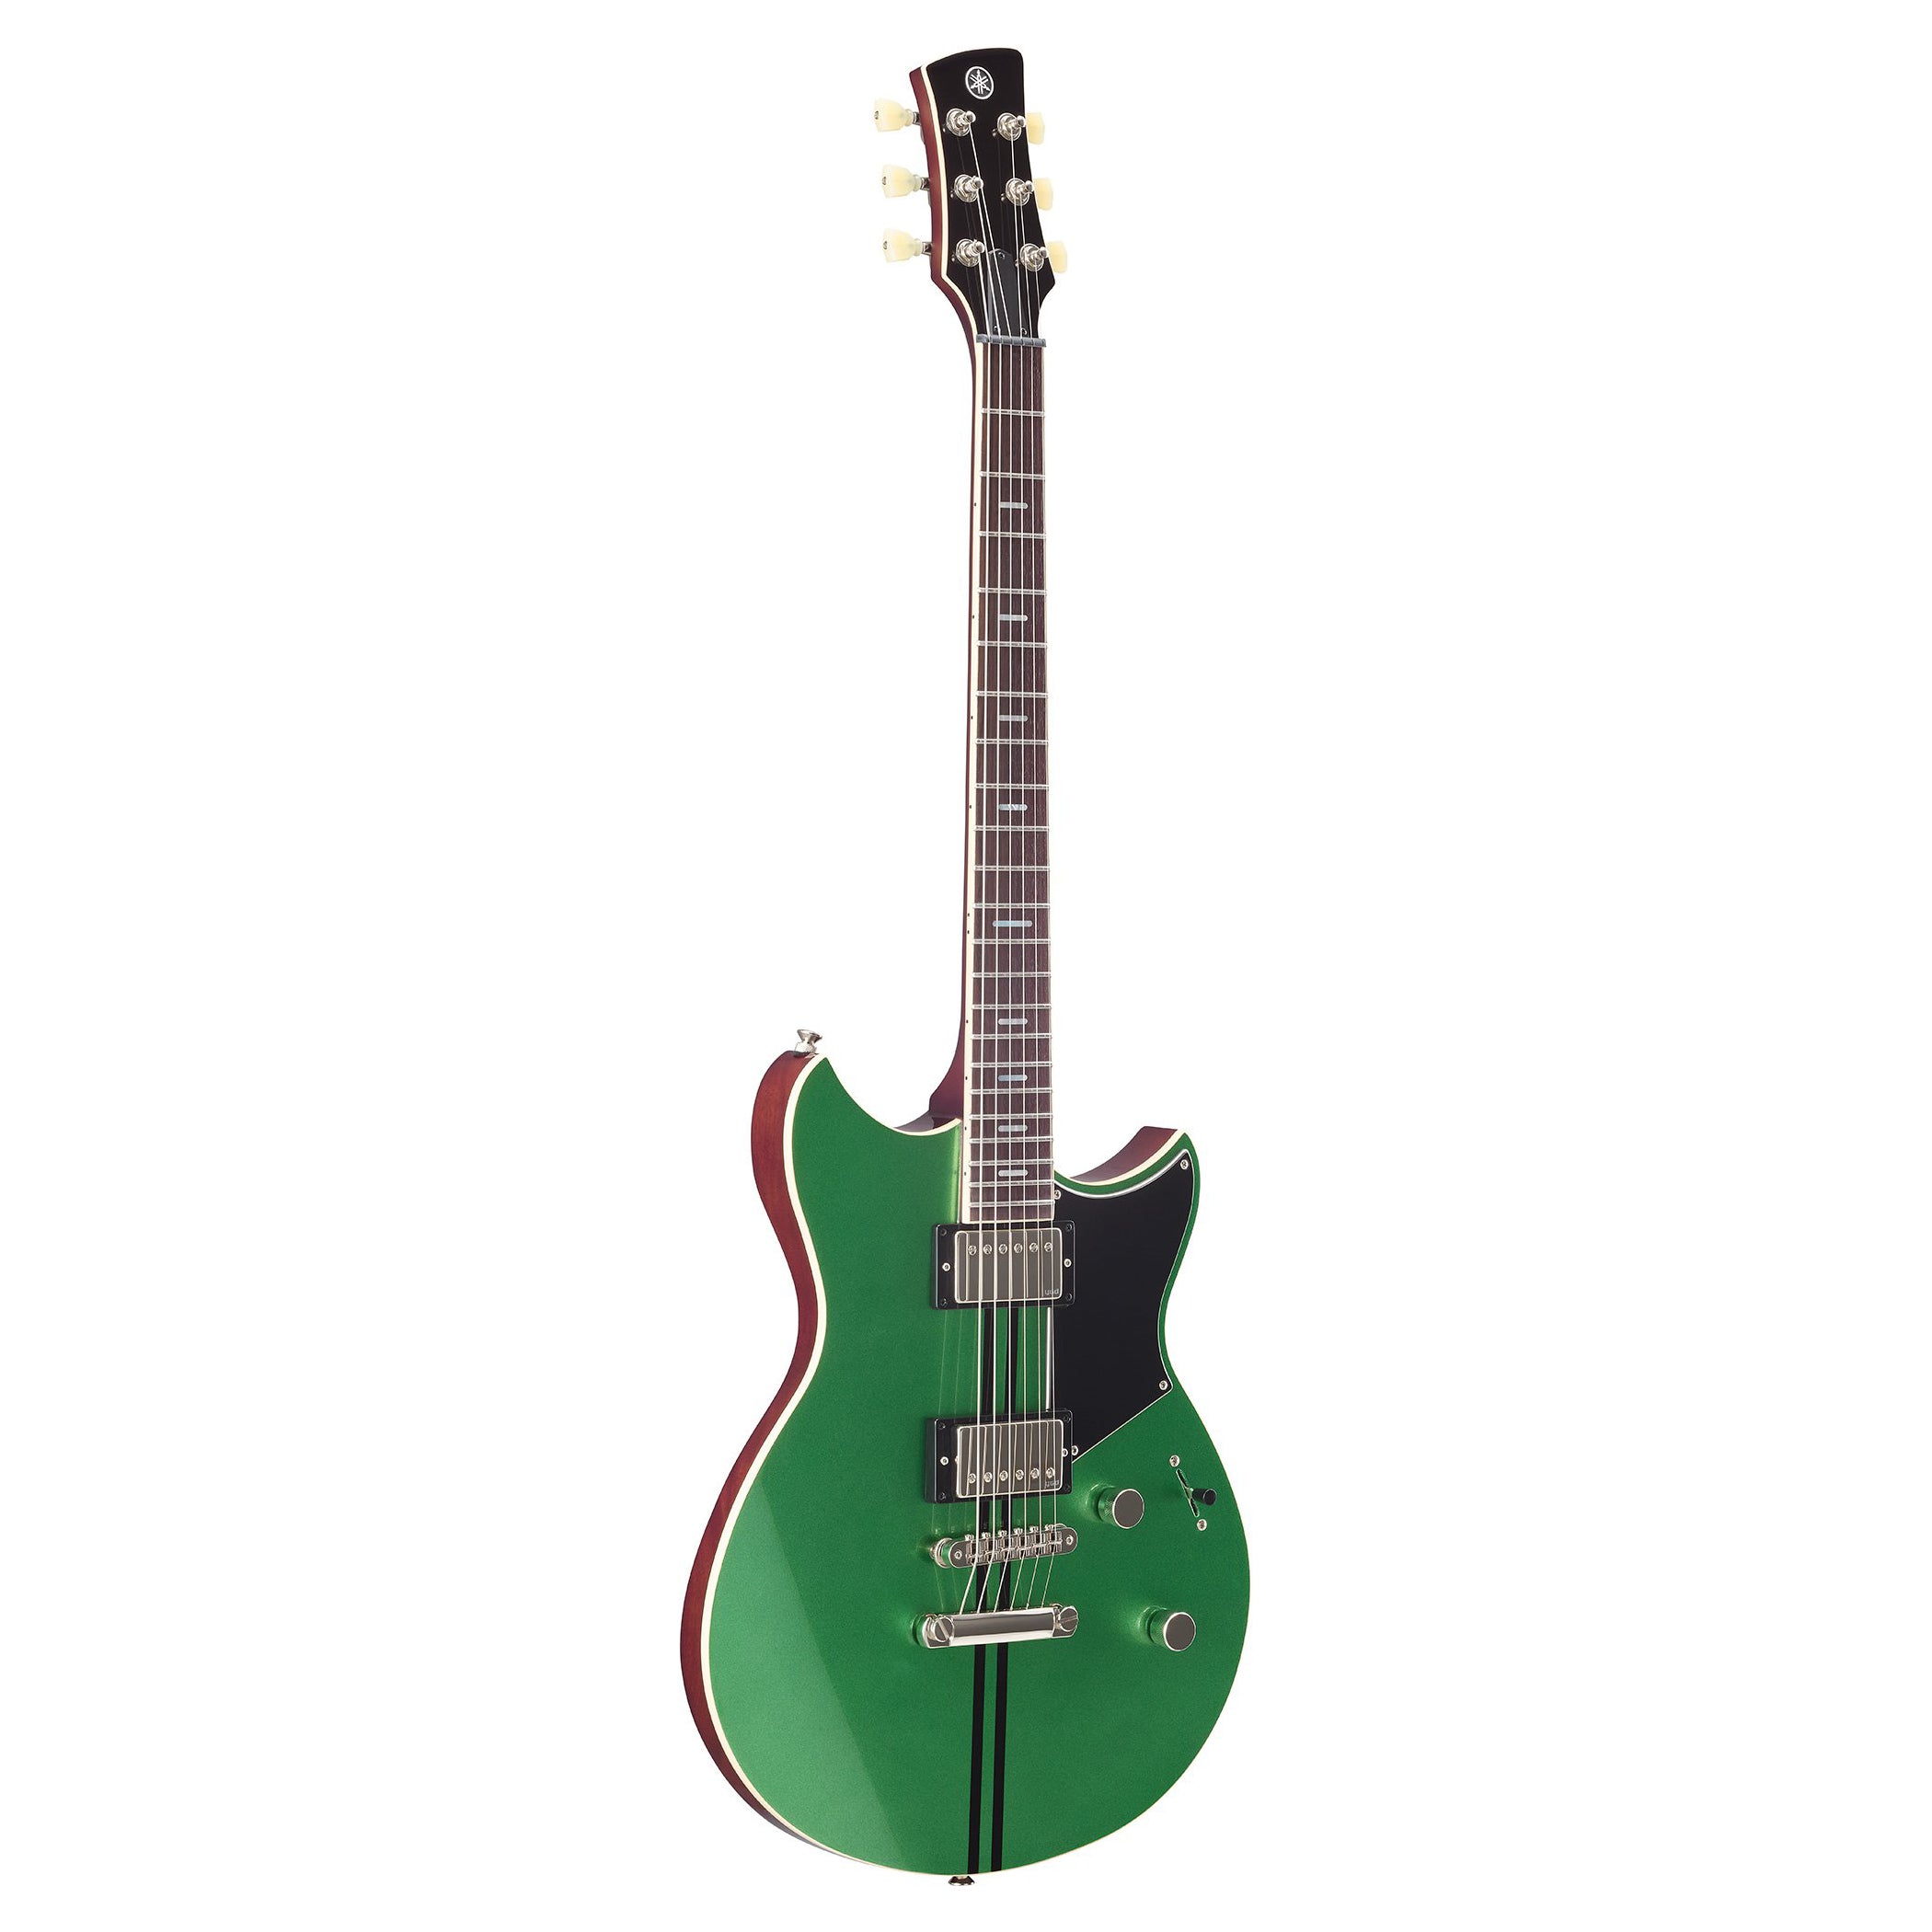 Yamaha RSS20 Revstar Standard Electric Guitar - Flash Green